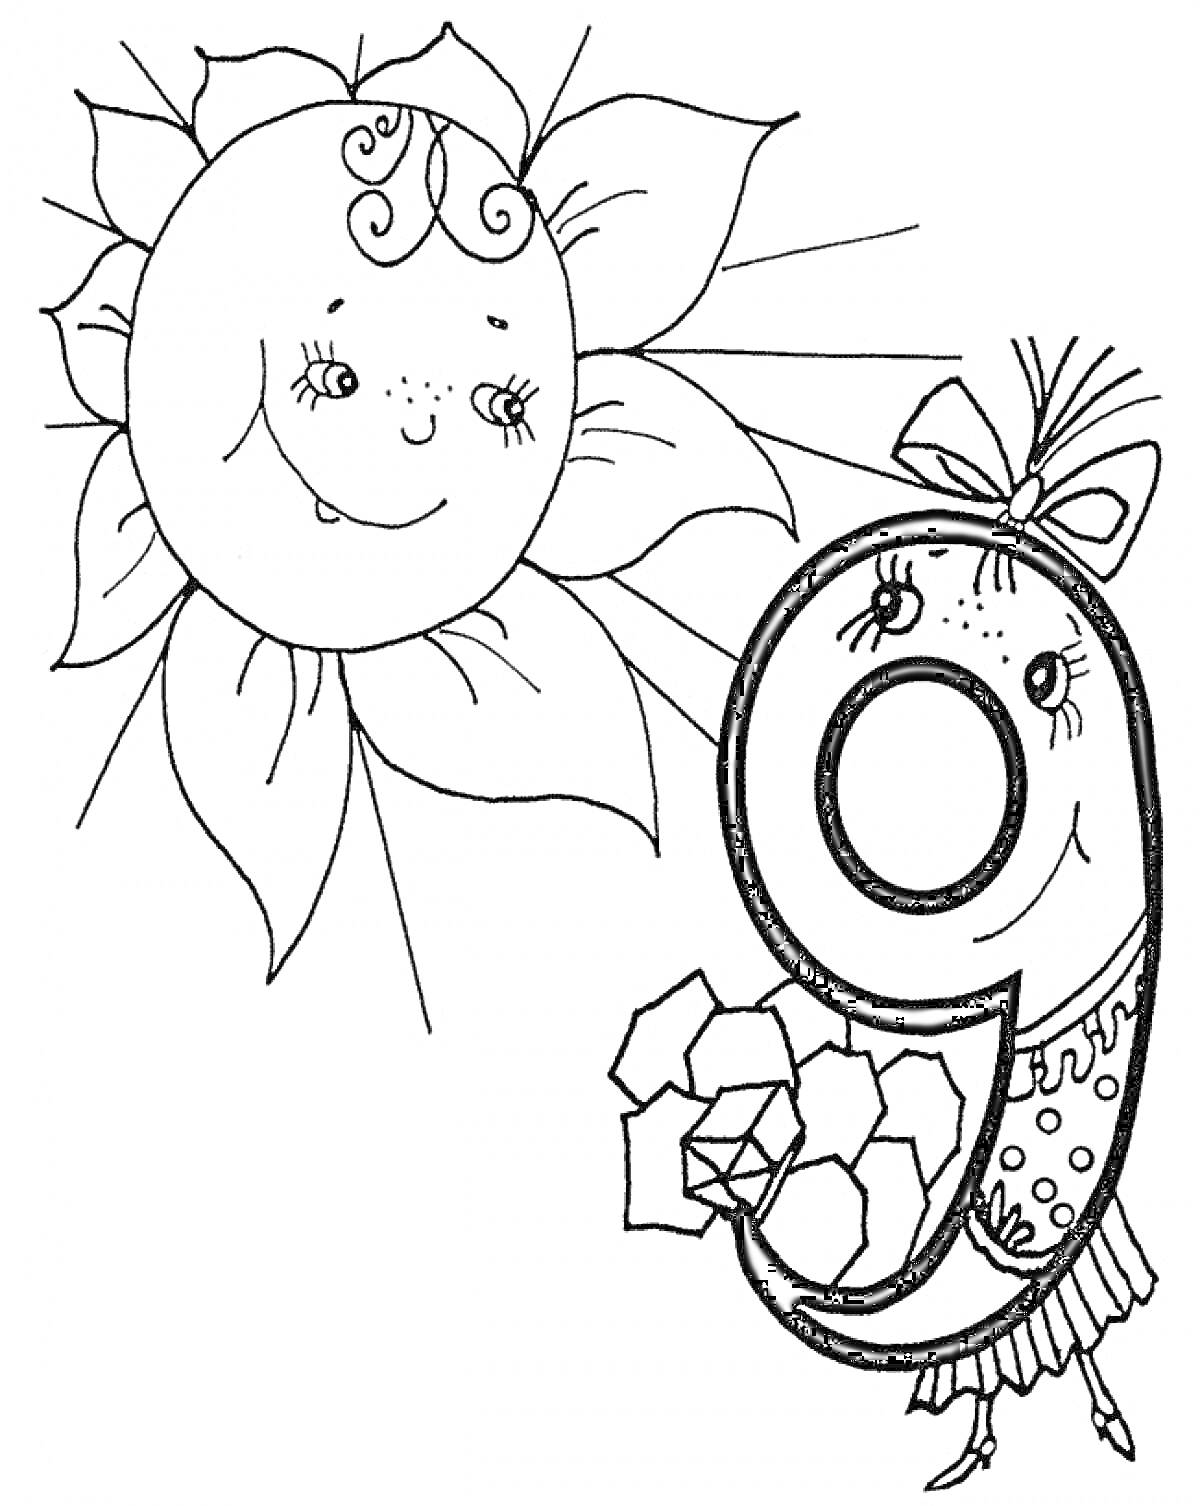 На раскраске изображено: Цифра 9, Цветы, Улыбающееся солнце, Цифры, Улыбка, Для детей, Бант